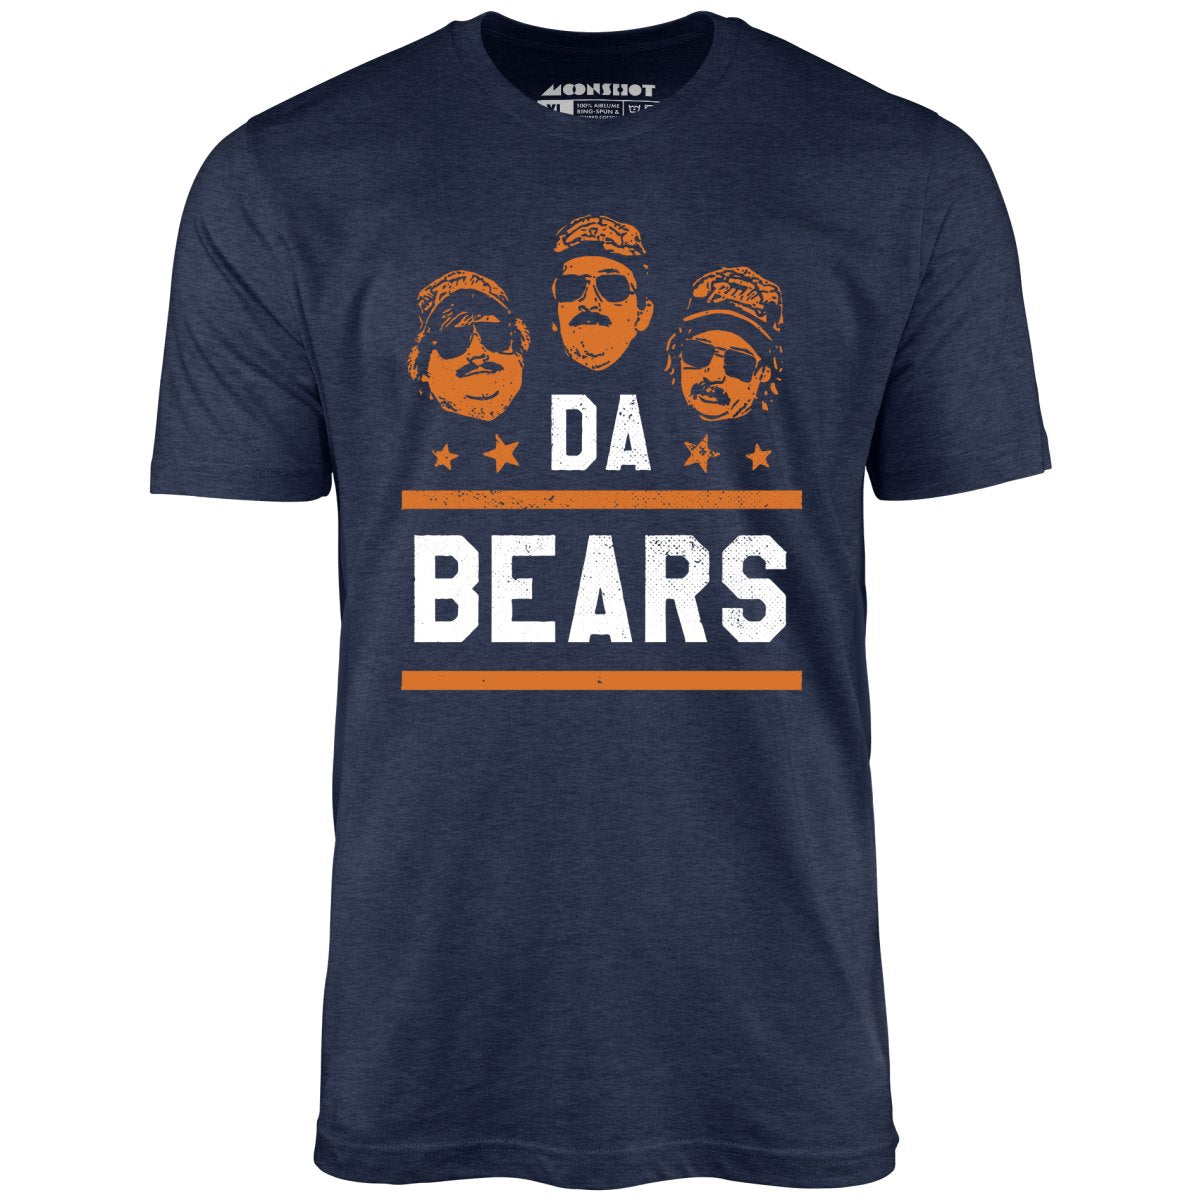 Da Bears - Unisex T-Shirt